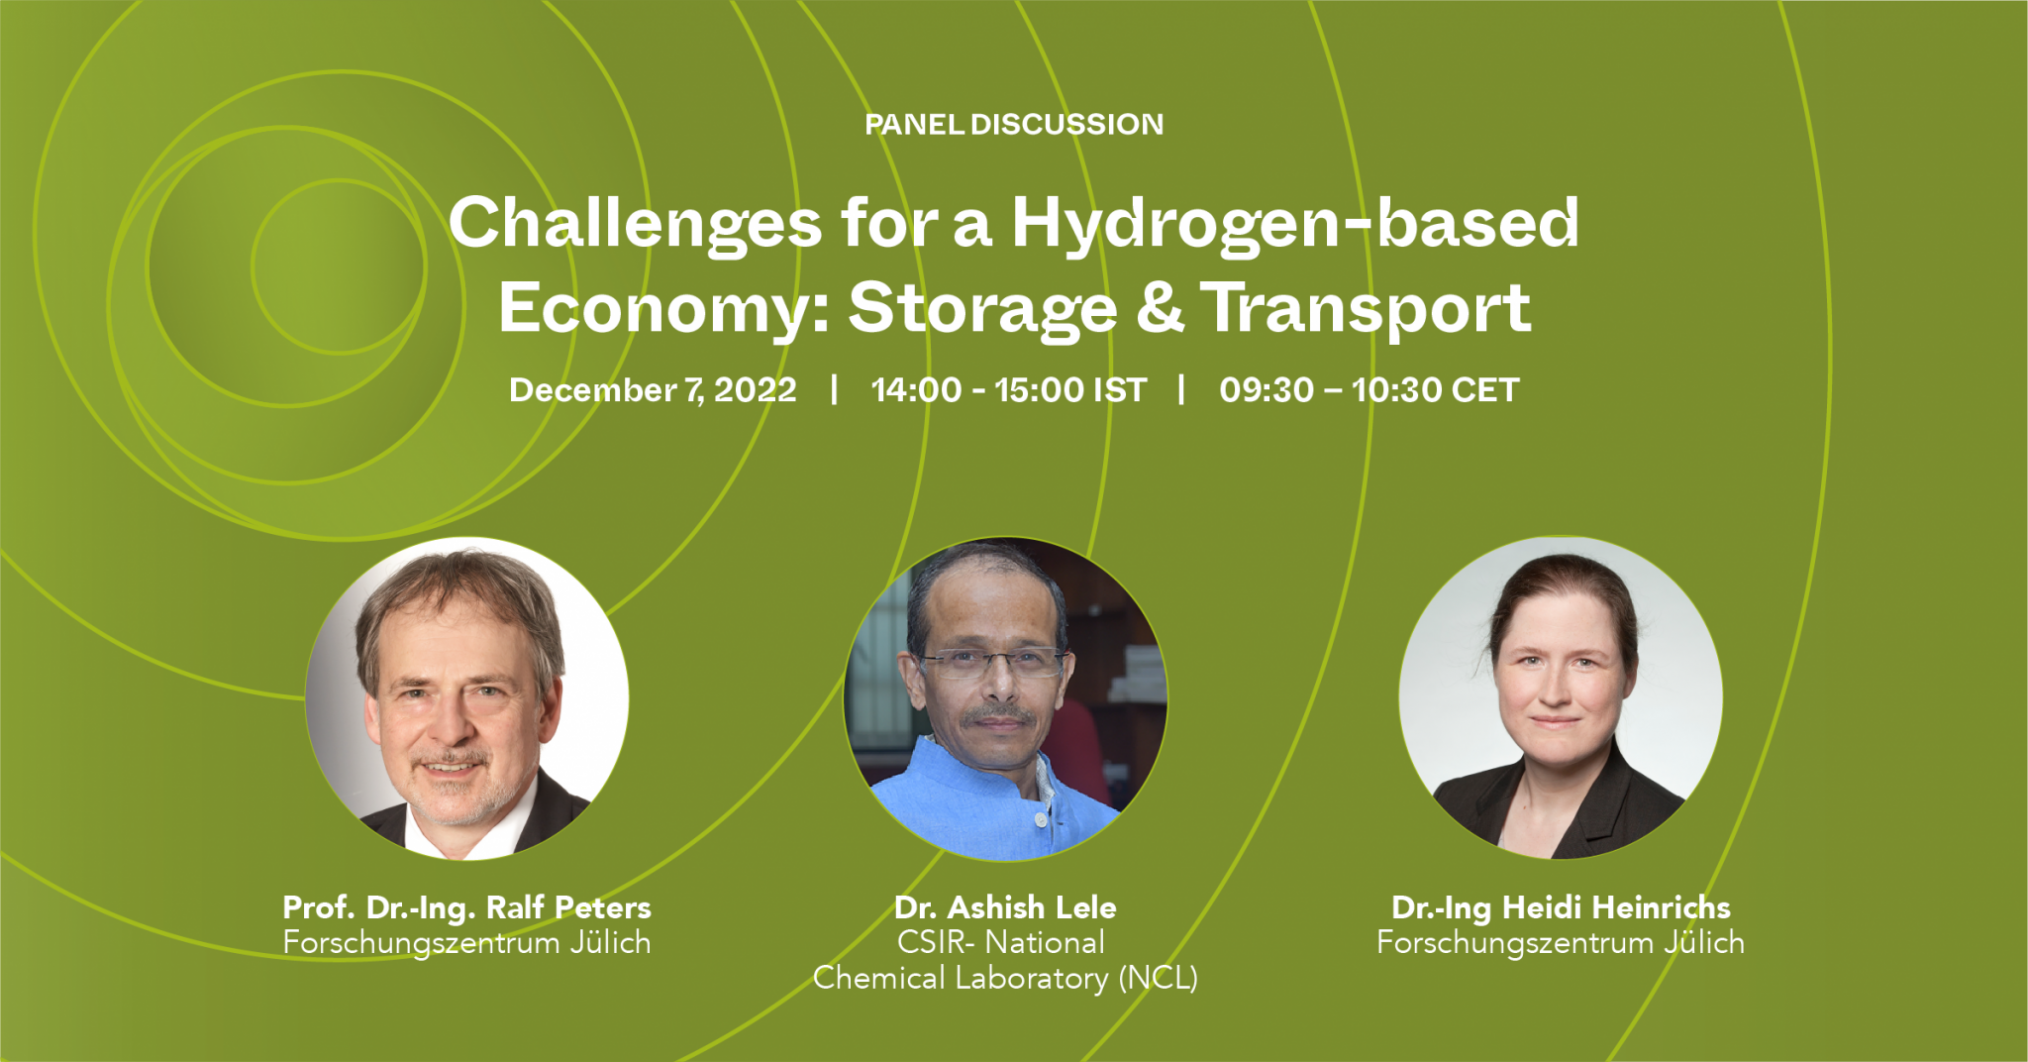 DWIH New Delhi Symposium “International Cooperation for Green Hydrogen”, Online